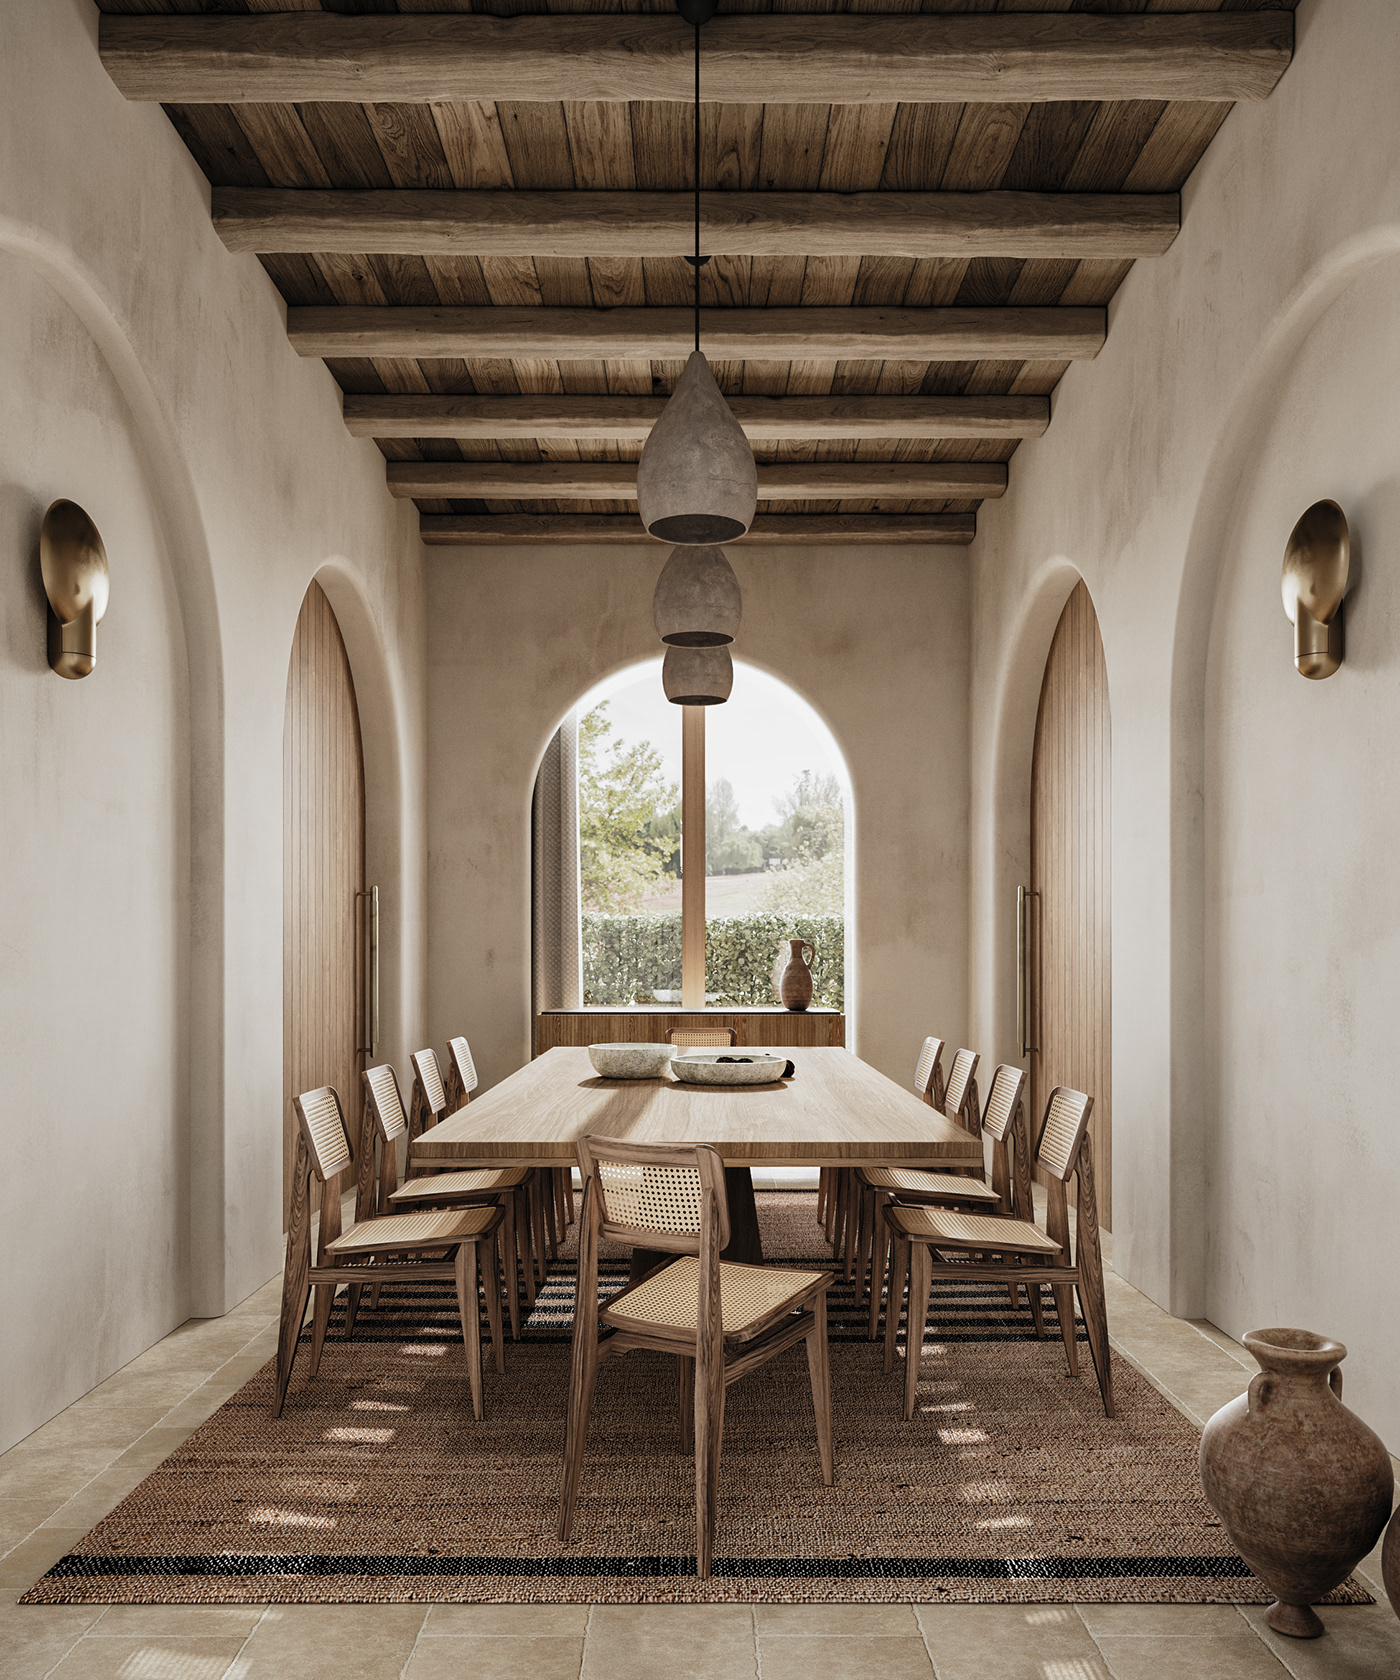 3ds max corona render  interior design  Render design Villa Wabi Sabi interiors architecture visualization